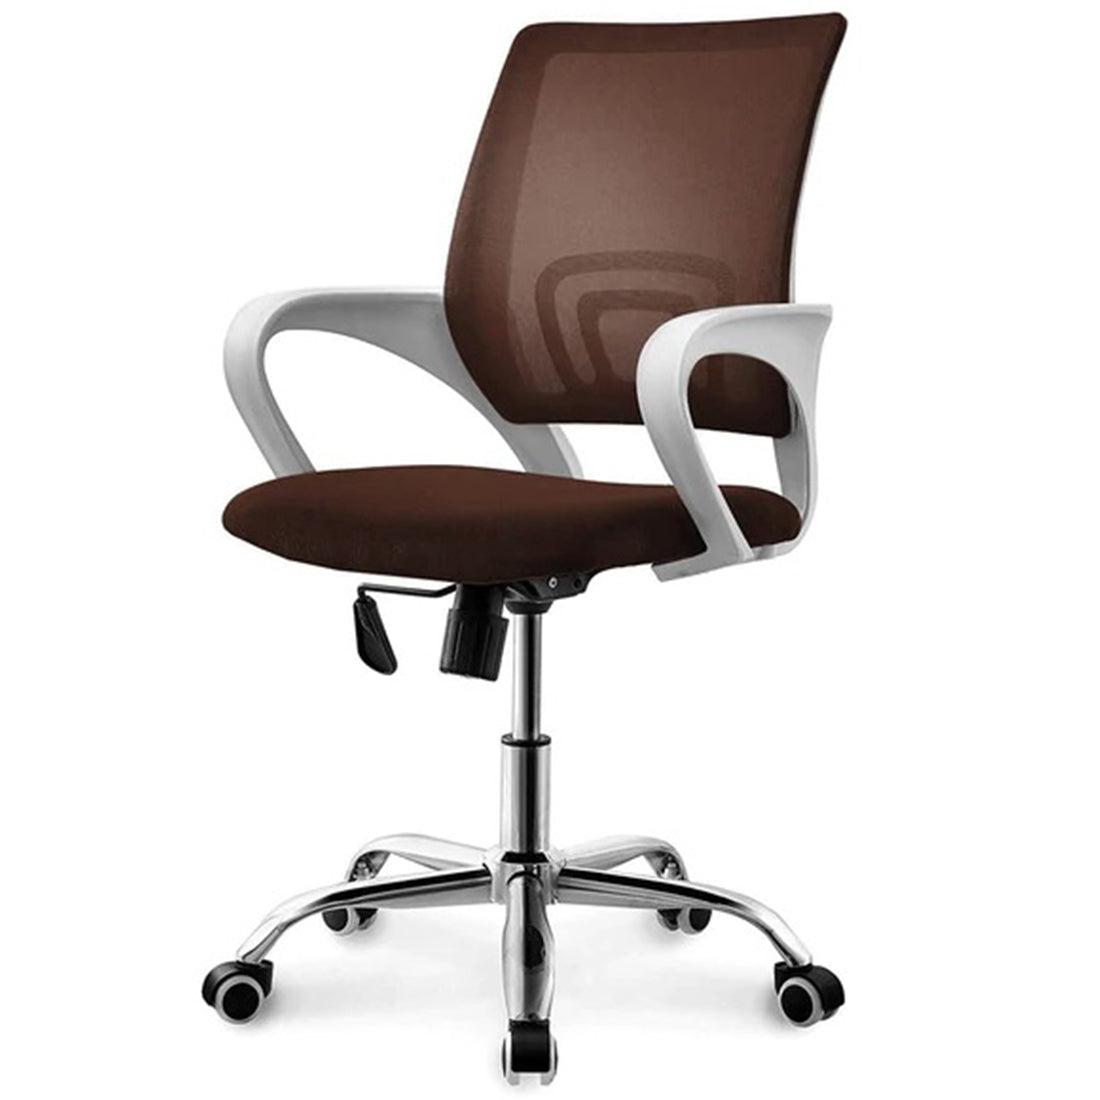 Detec™ Adjustable Ergonomic Revolving Chair 